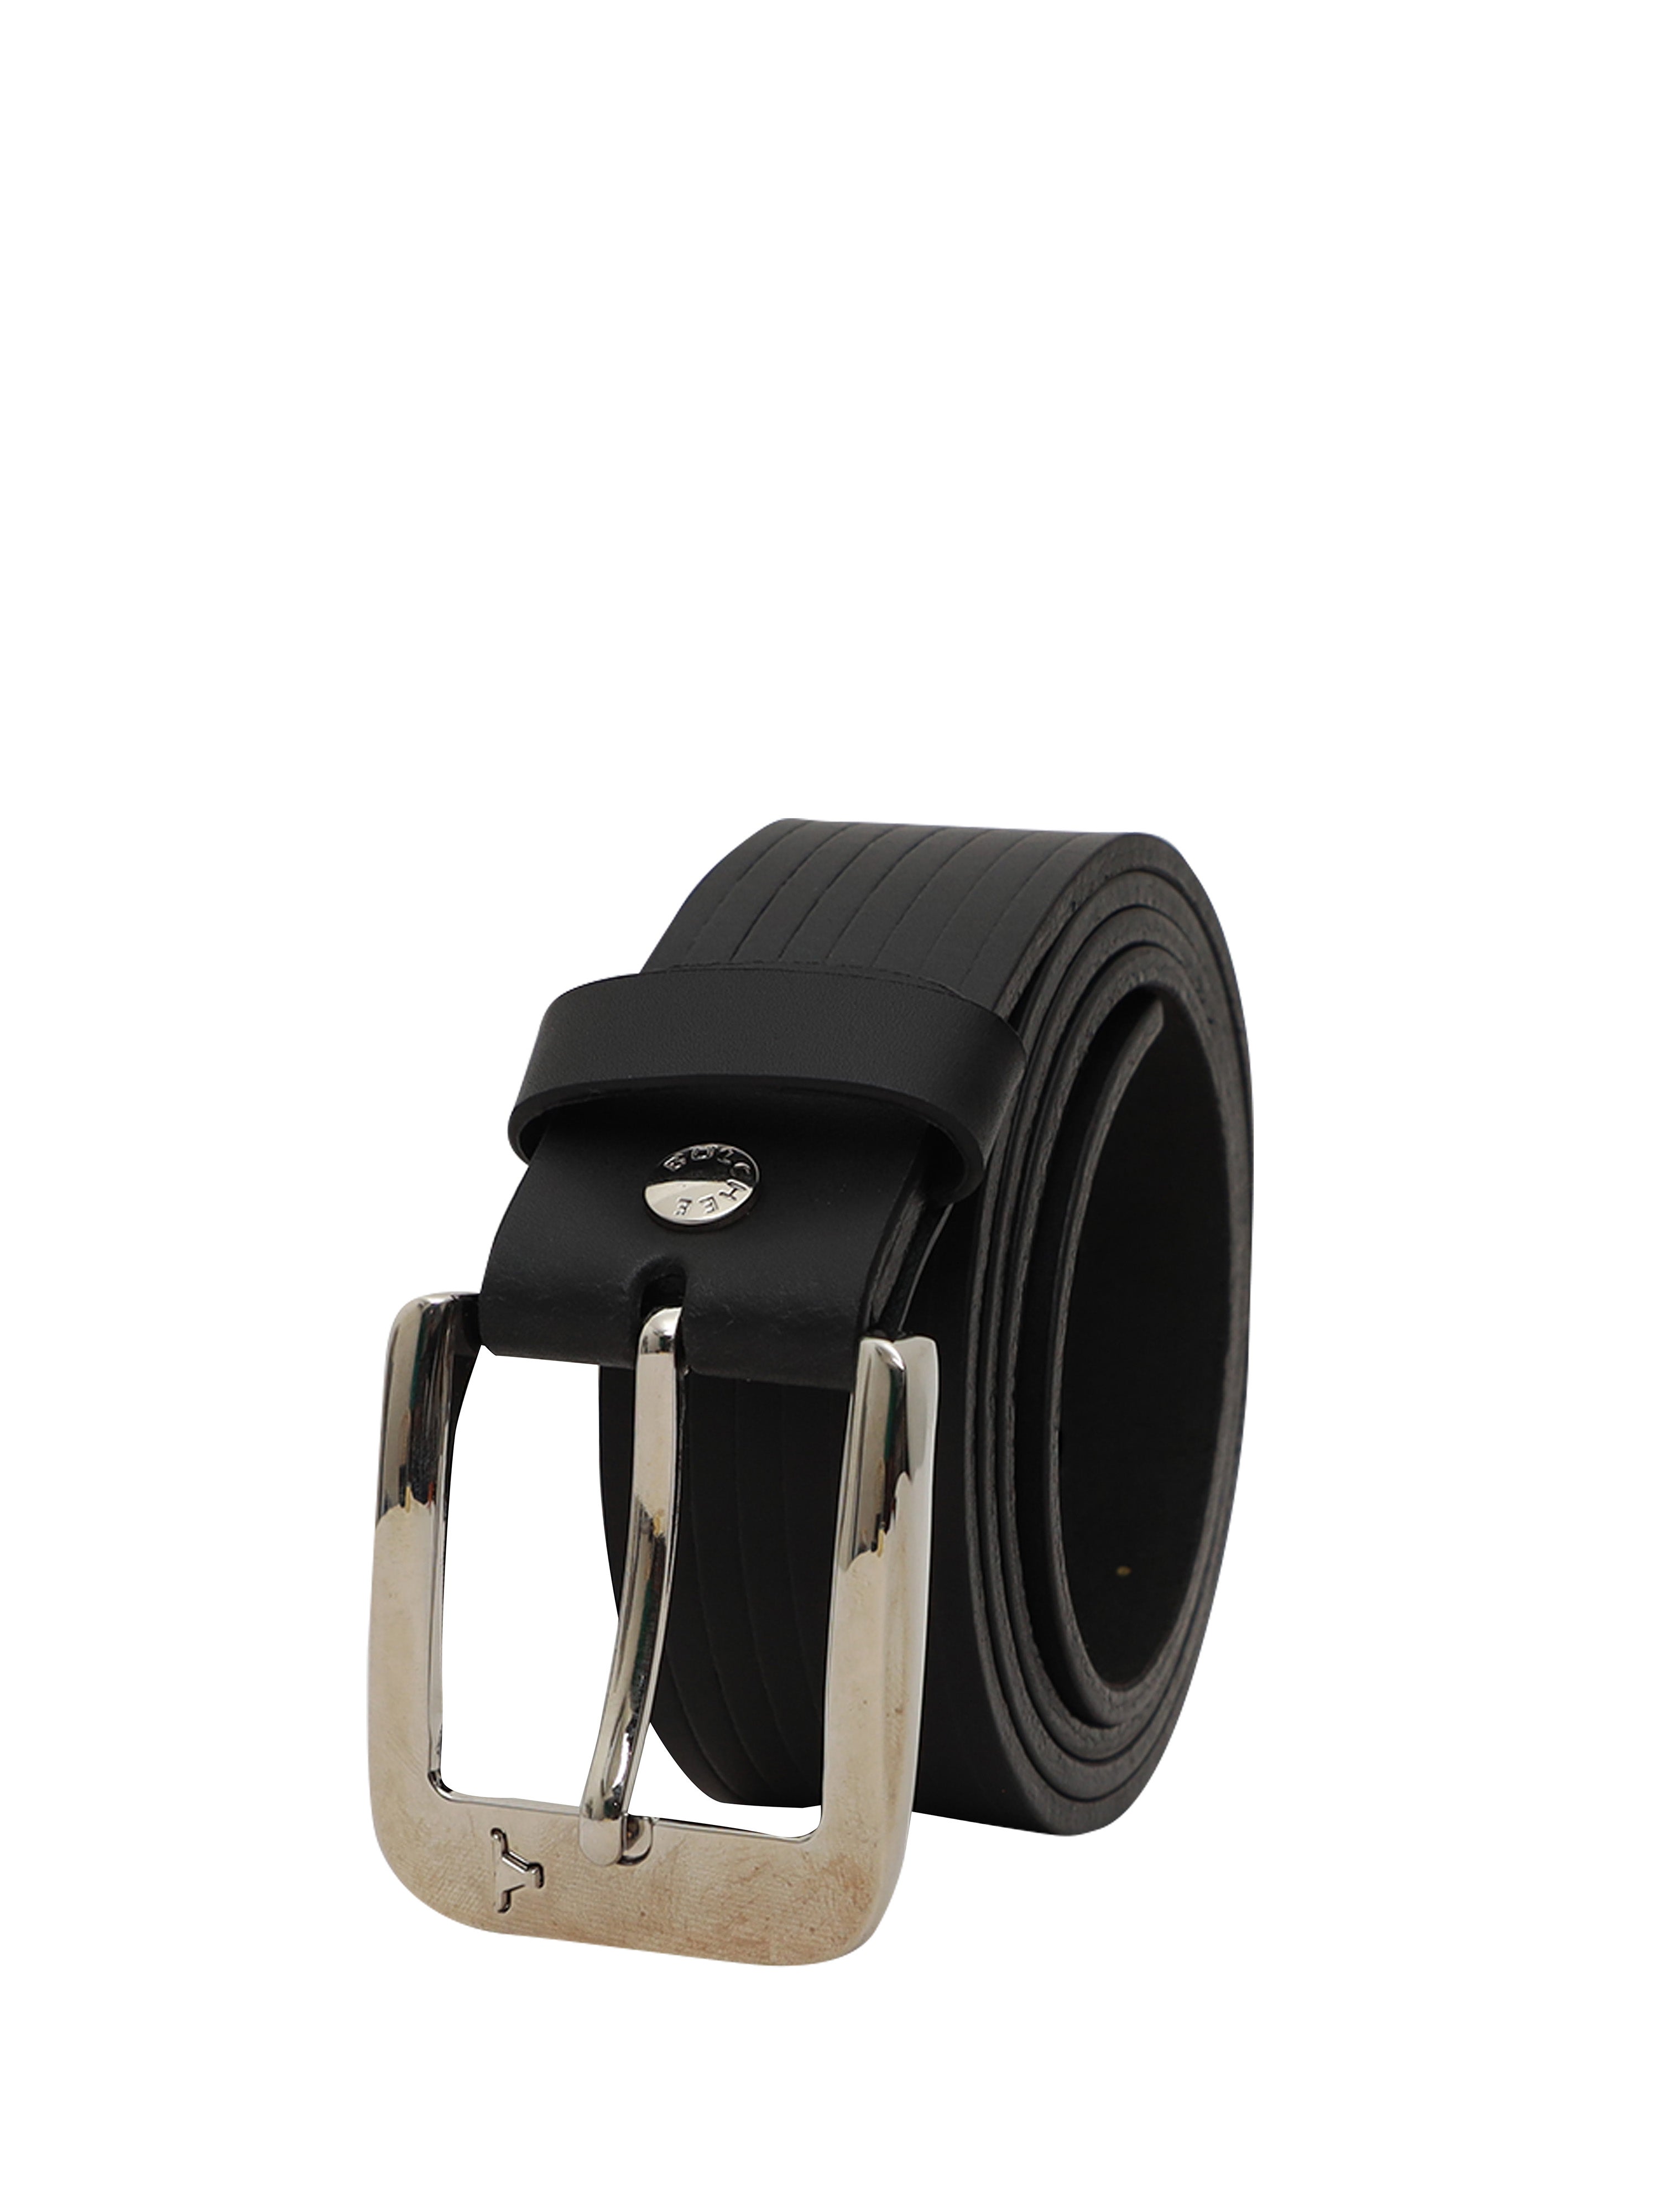 Bulchee Premium Collections Men's Genuine Leather Belt | Embossed Jeans | Black | BUL2179B